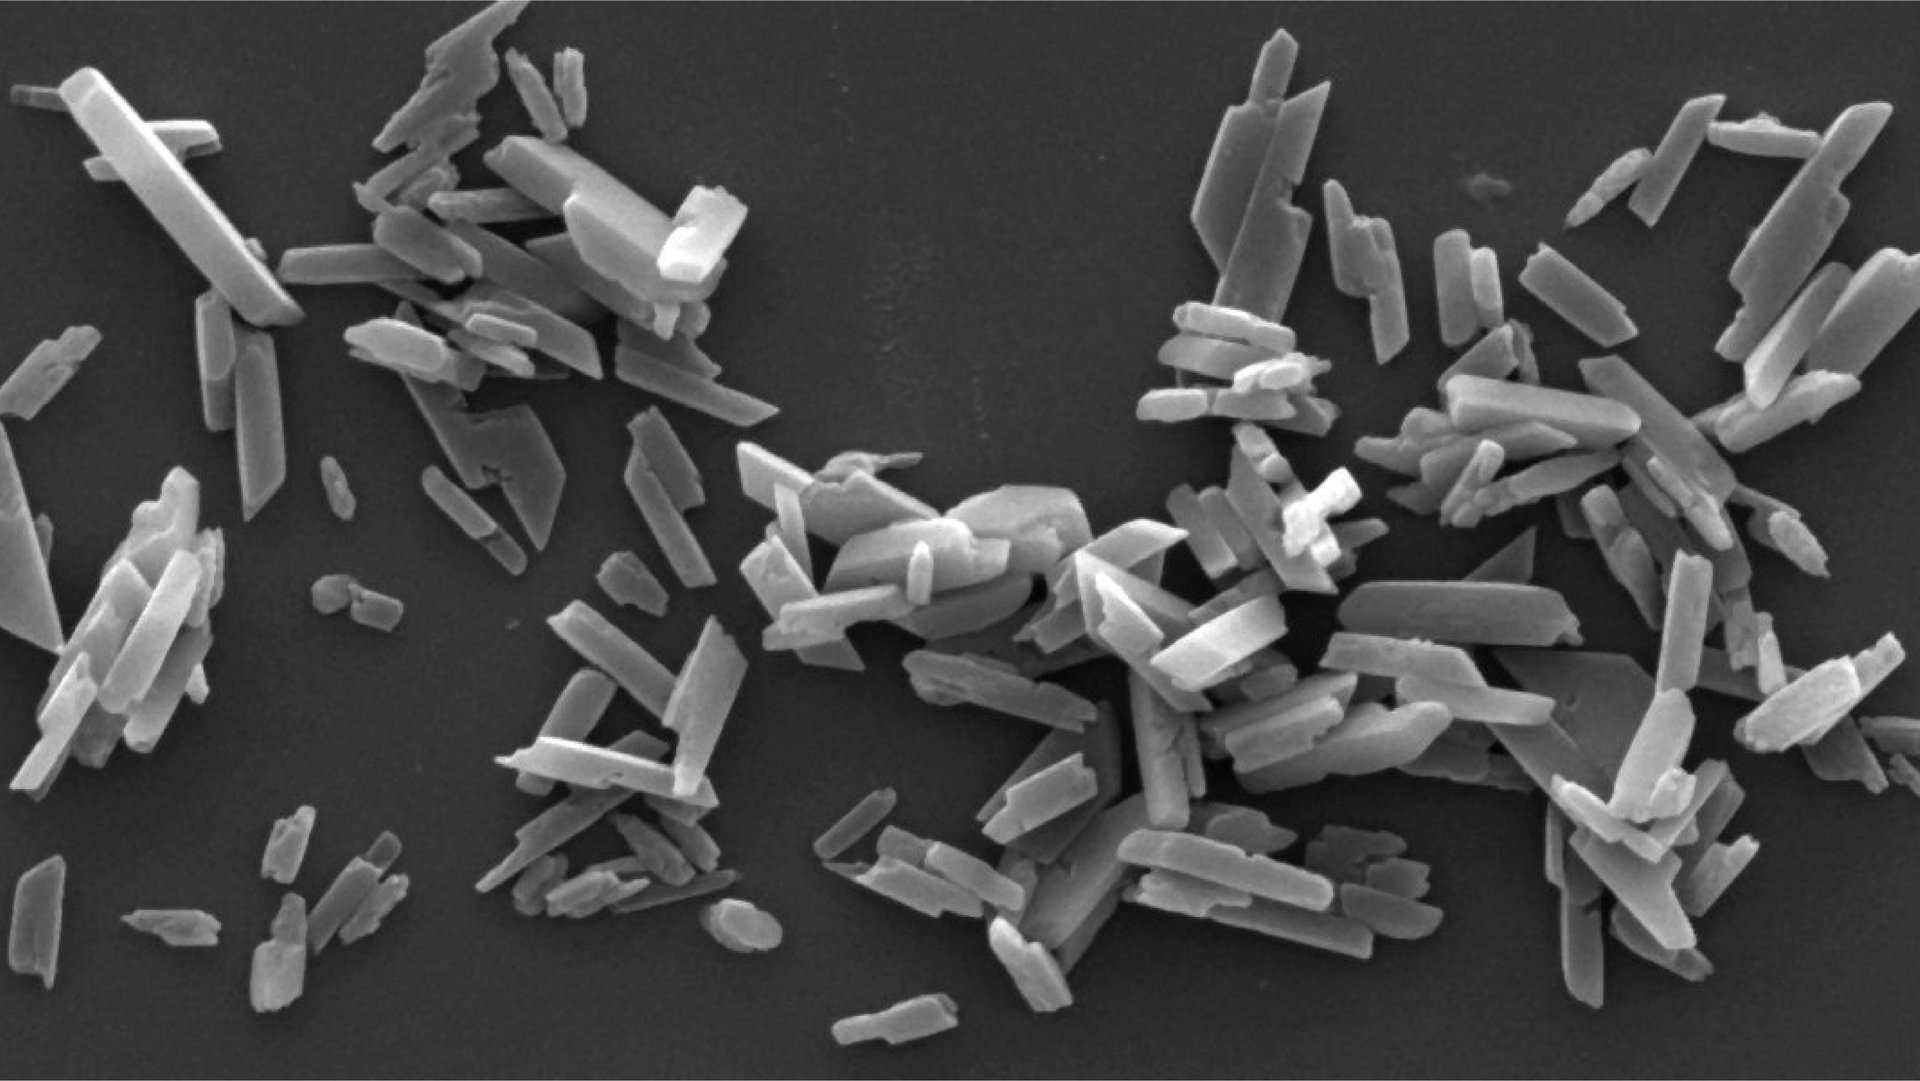 Isolated hemozoin crystals formed by Plasmodium falciparum parasites